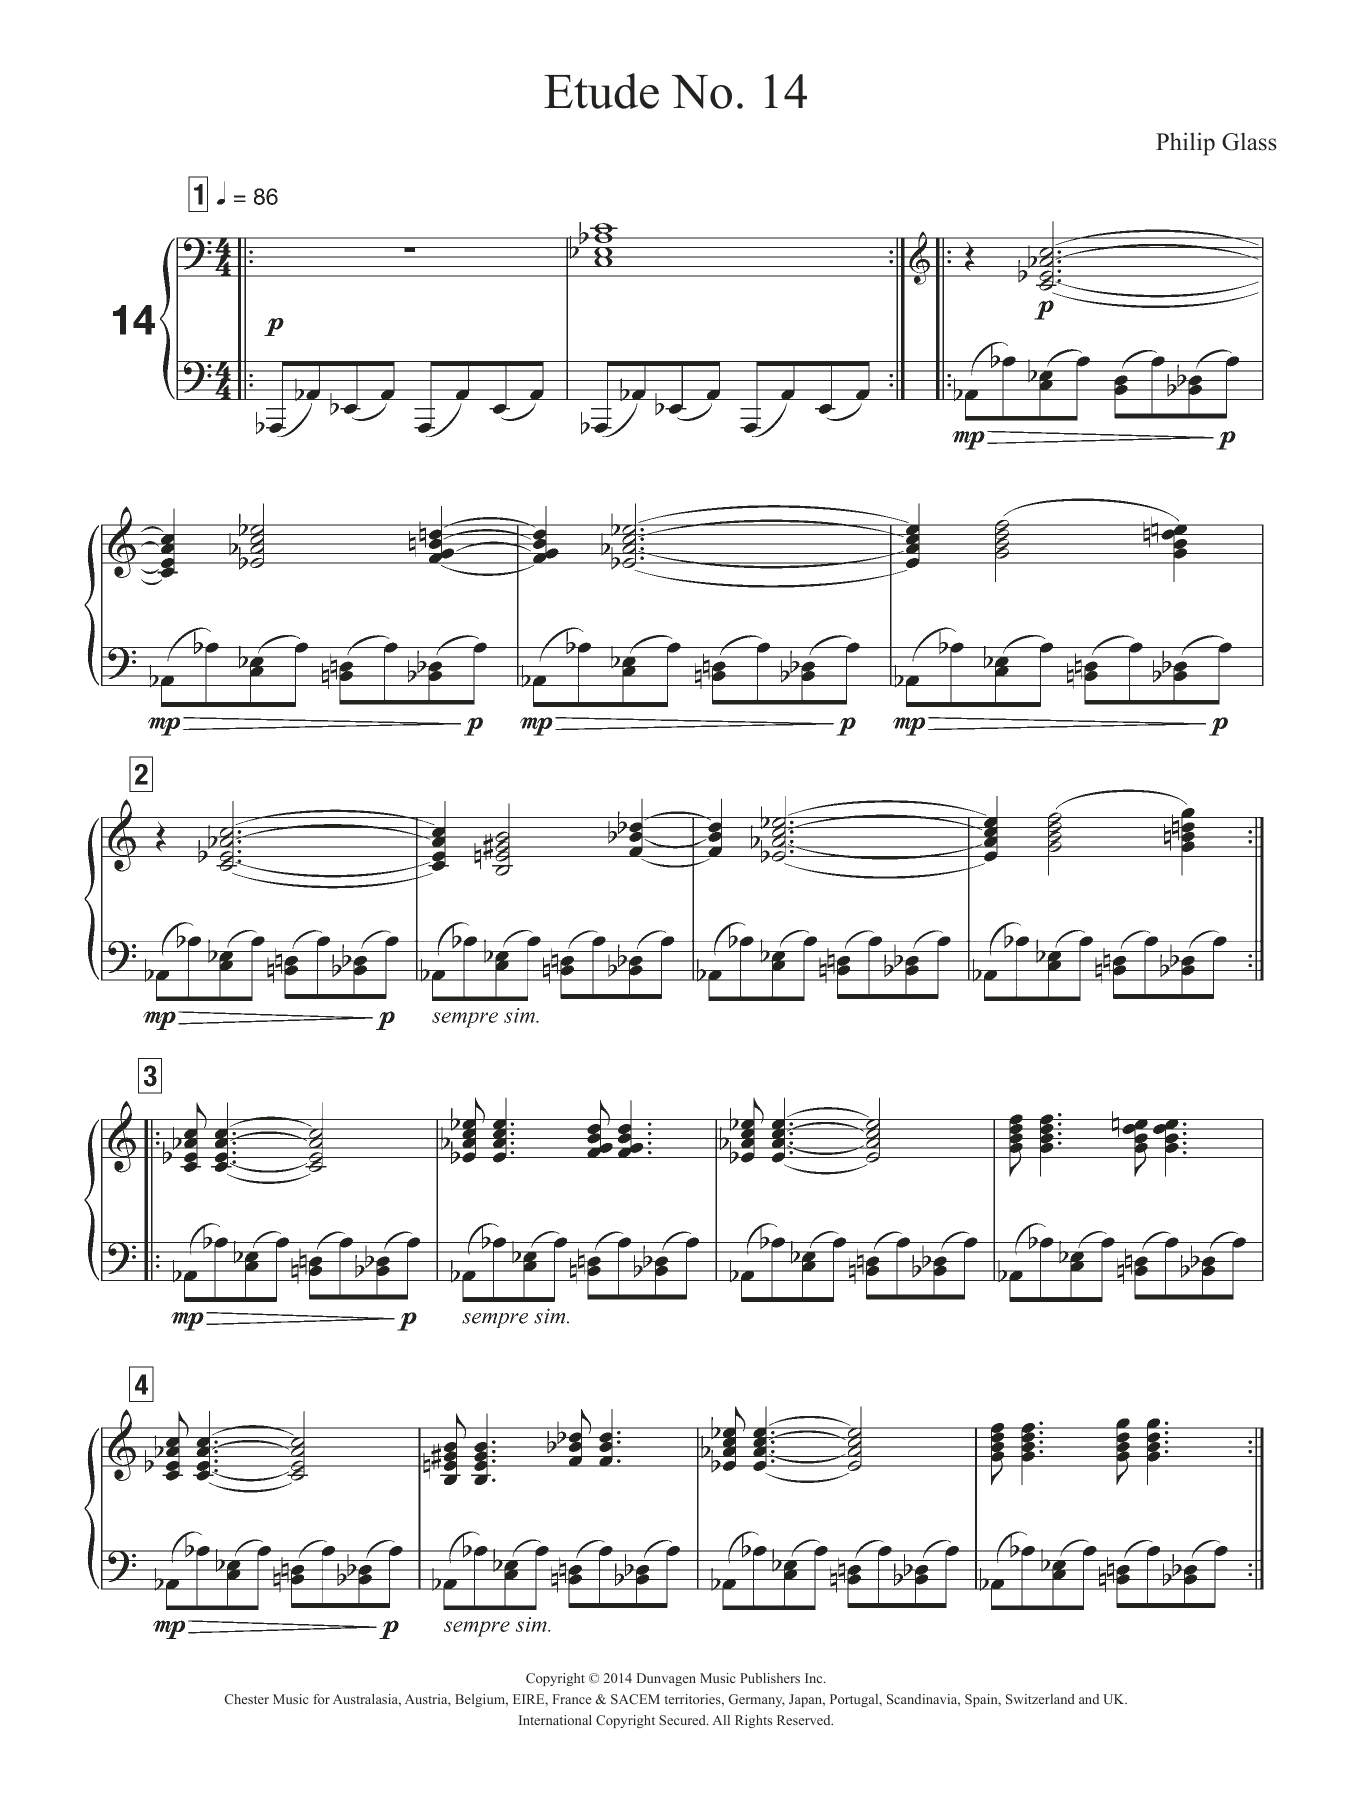 Download Philip Glass Etude No. 14 Sheet Music